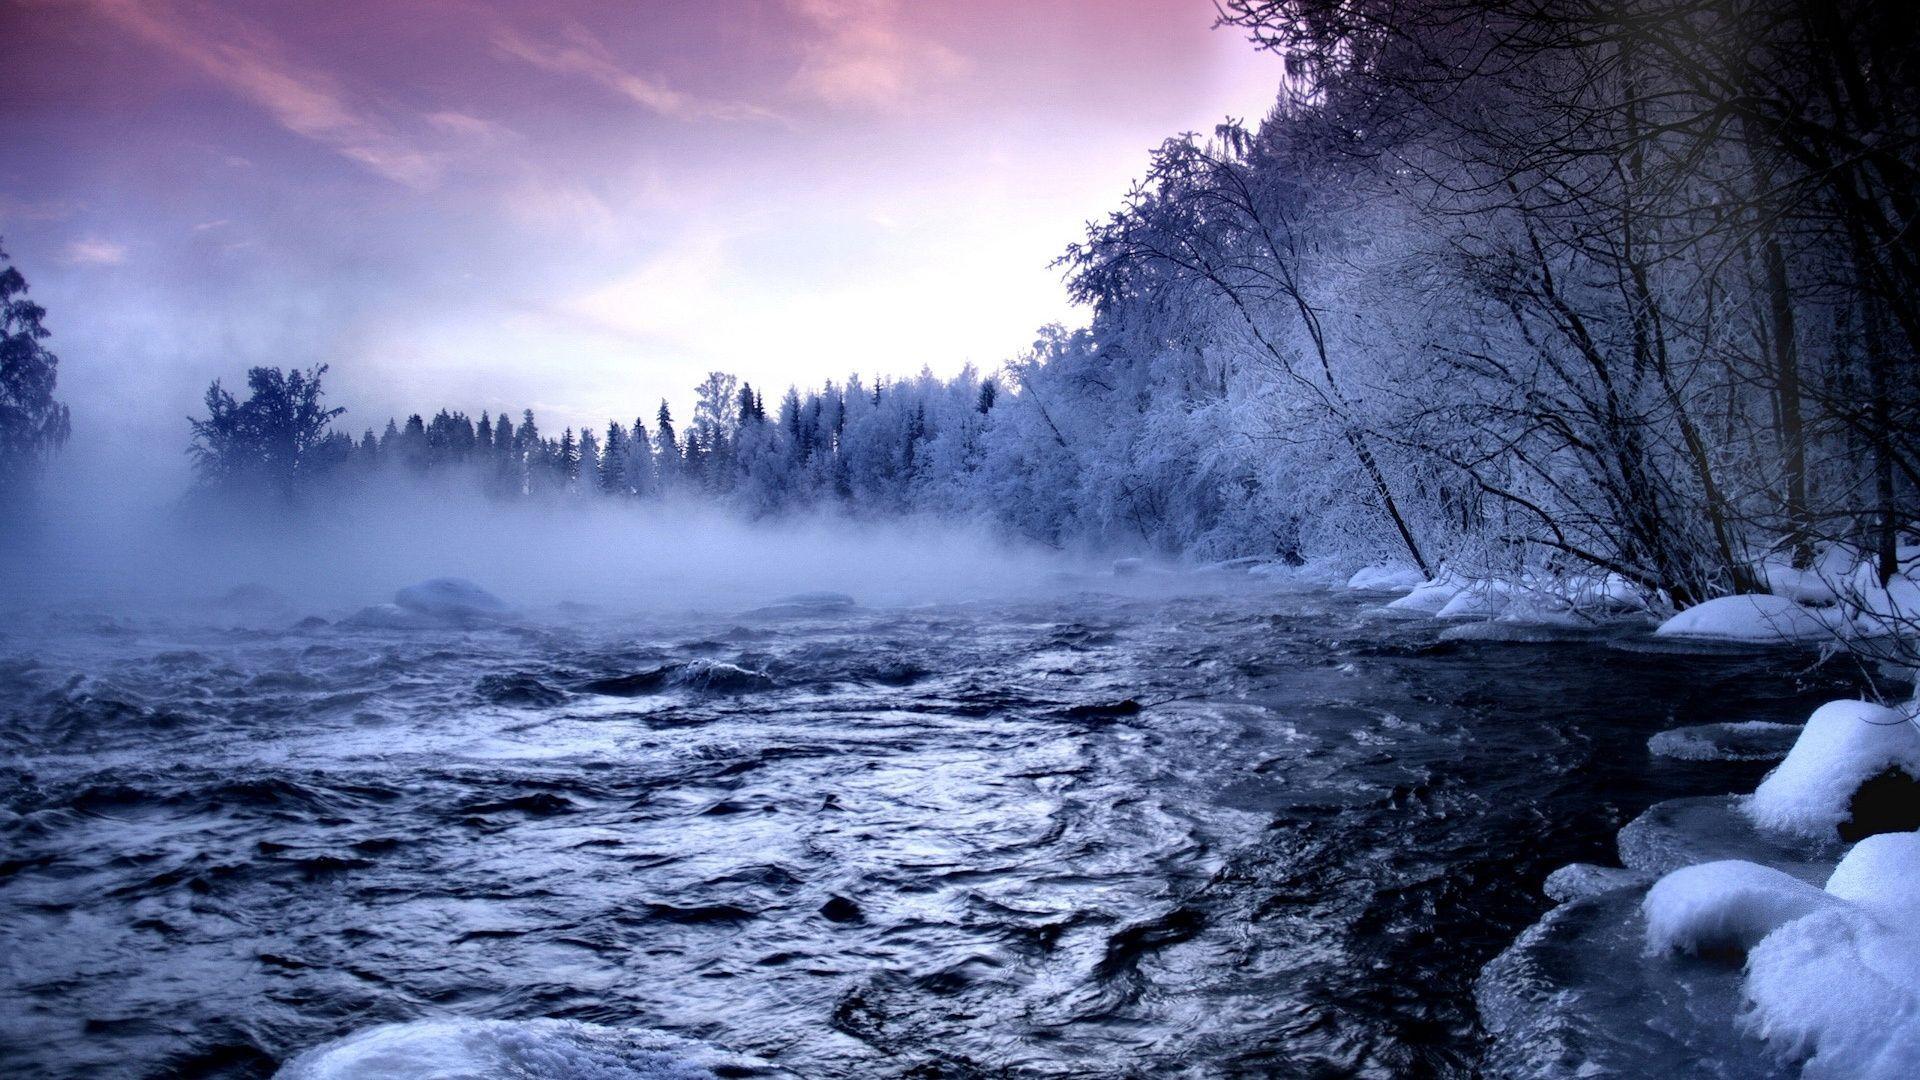 Nature: Beautiful Winter Landscape, picture nr. 60650